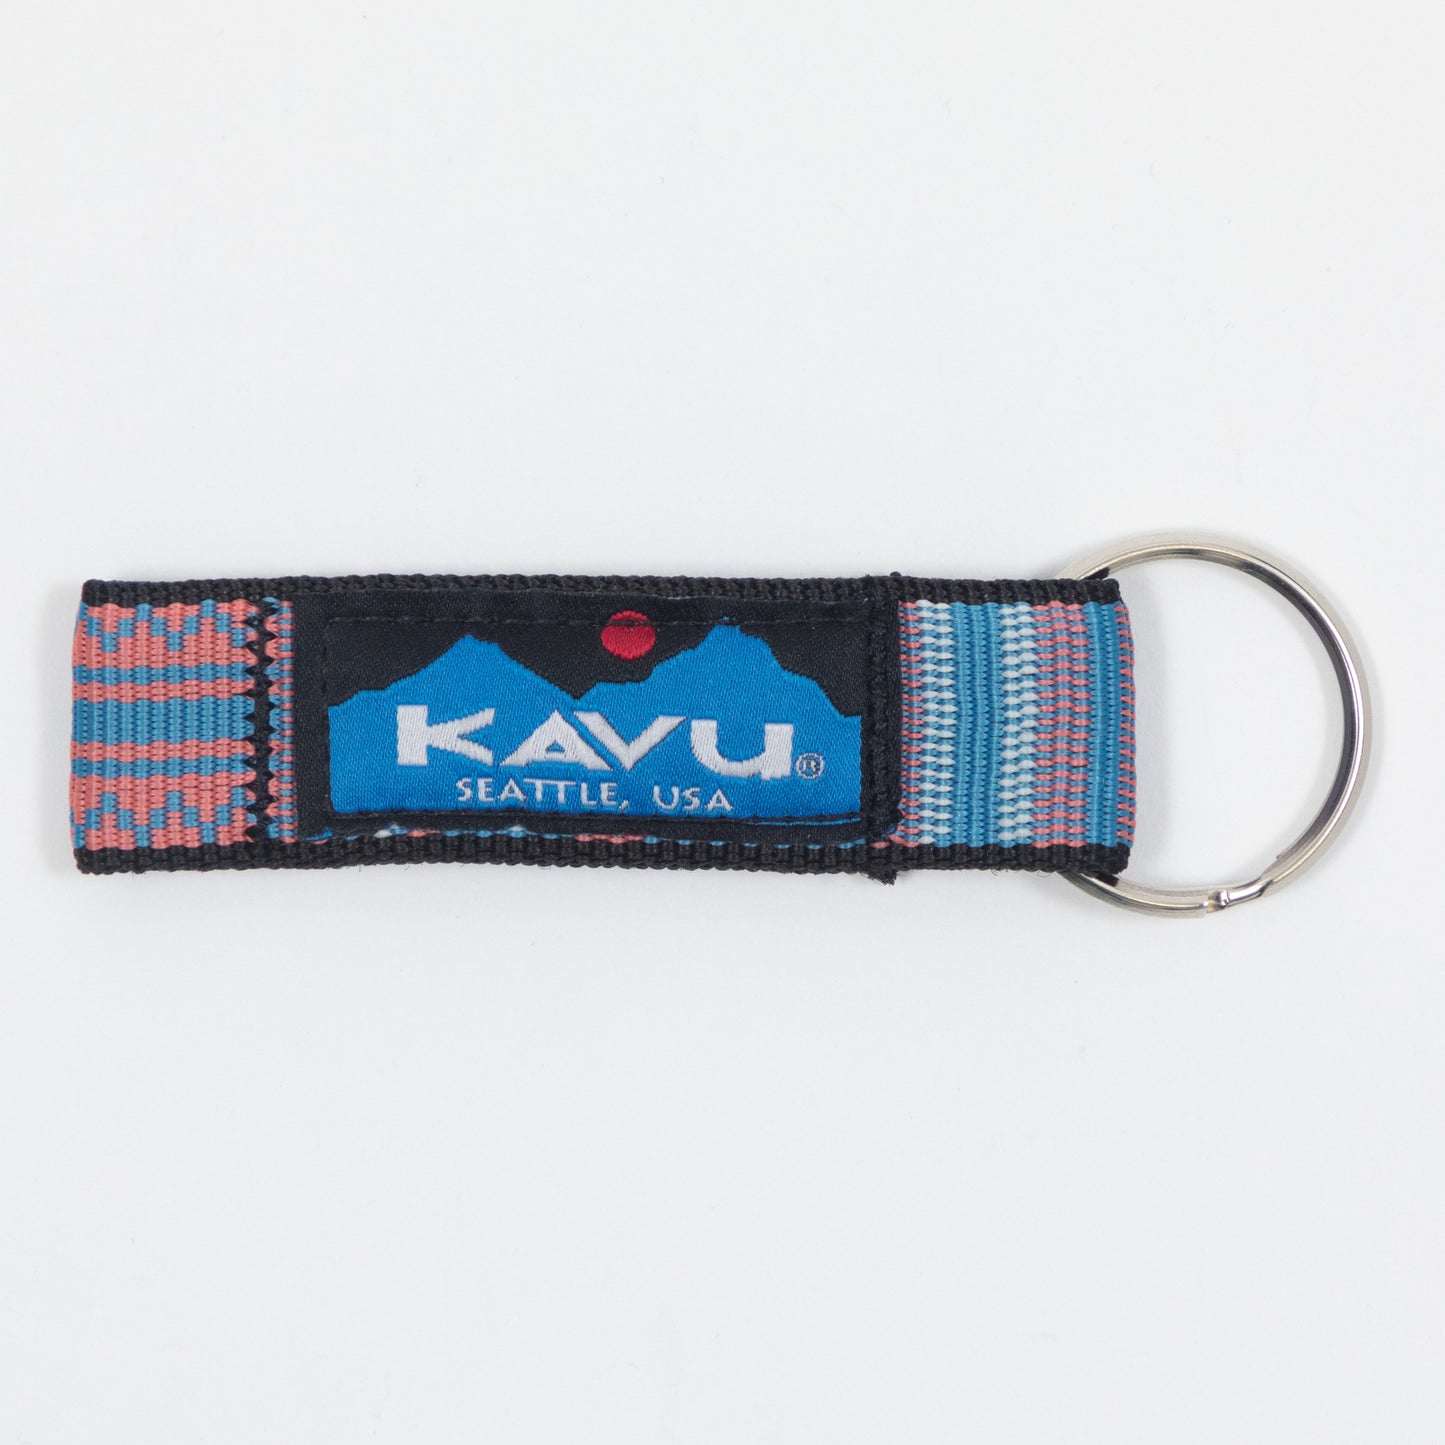 KAVU Key Chain Key Ring in ORANGE & BLUE